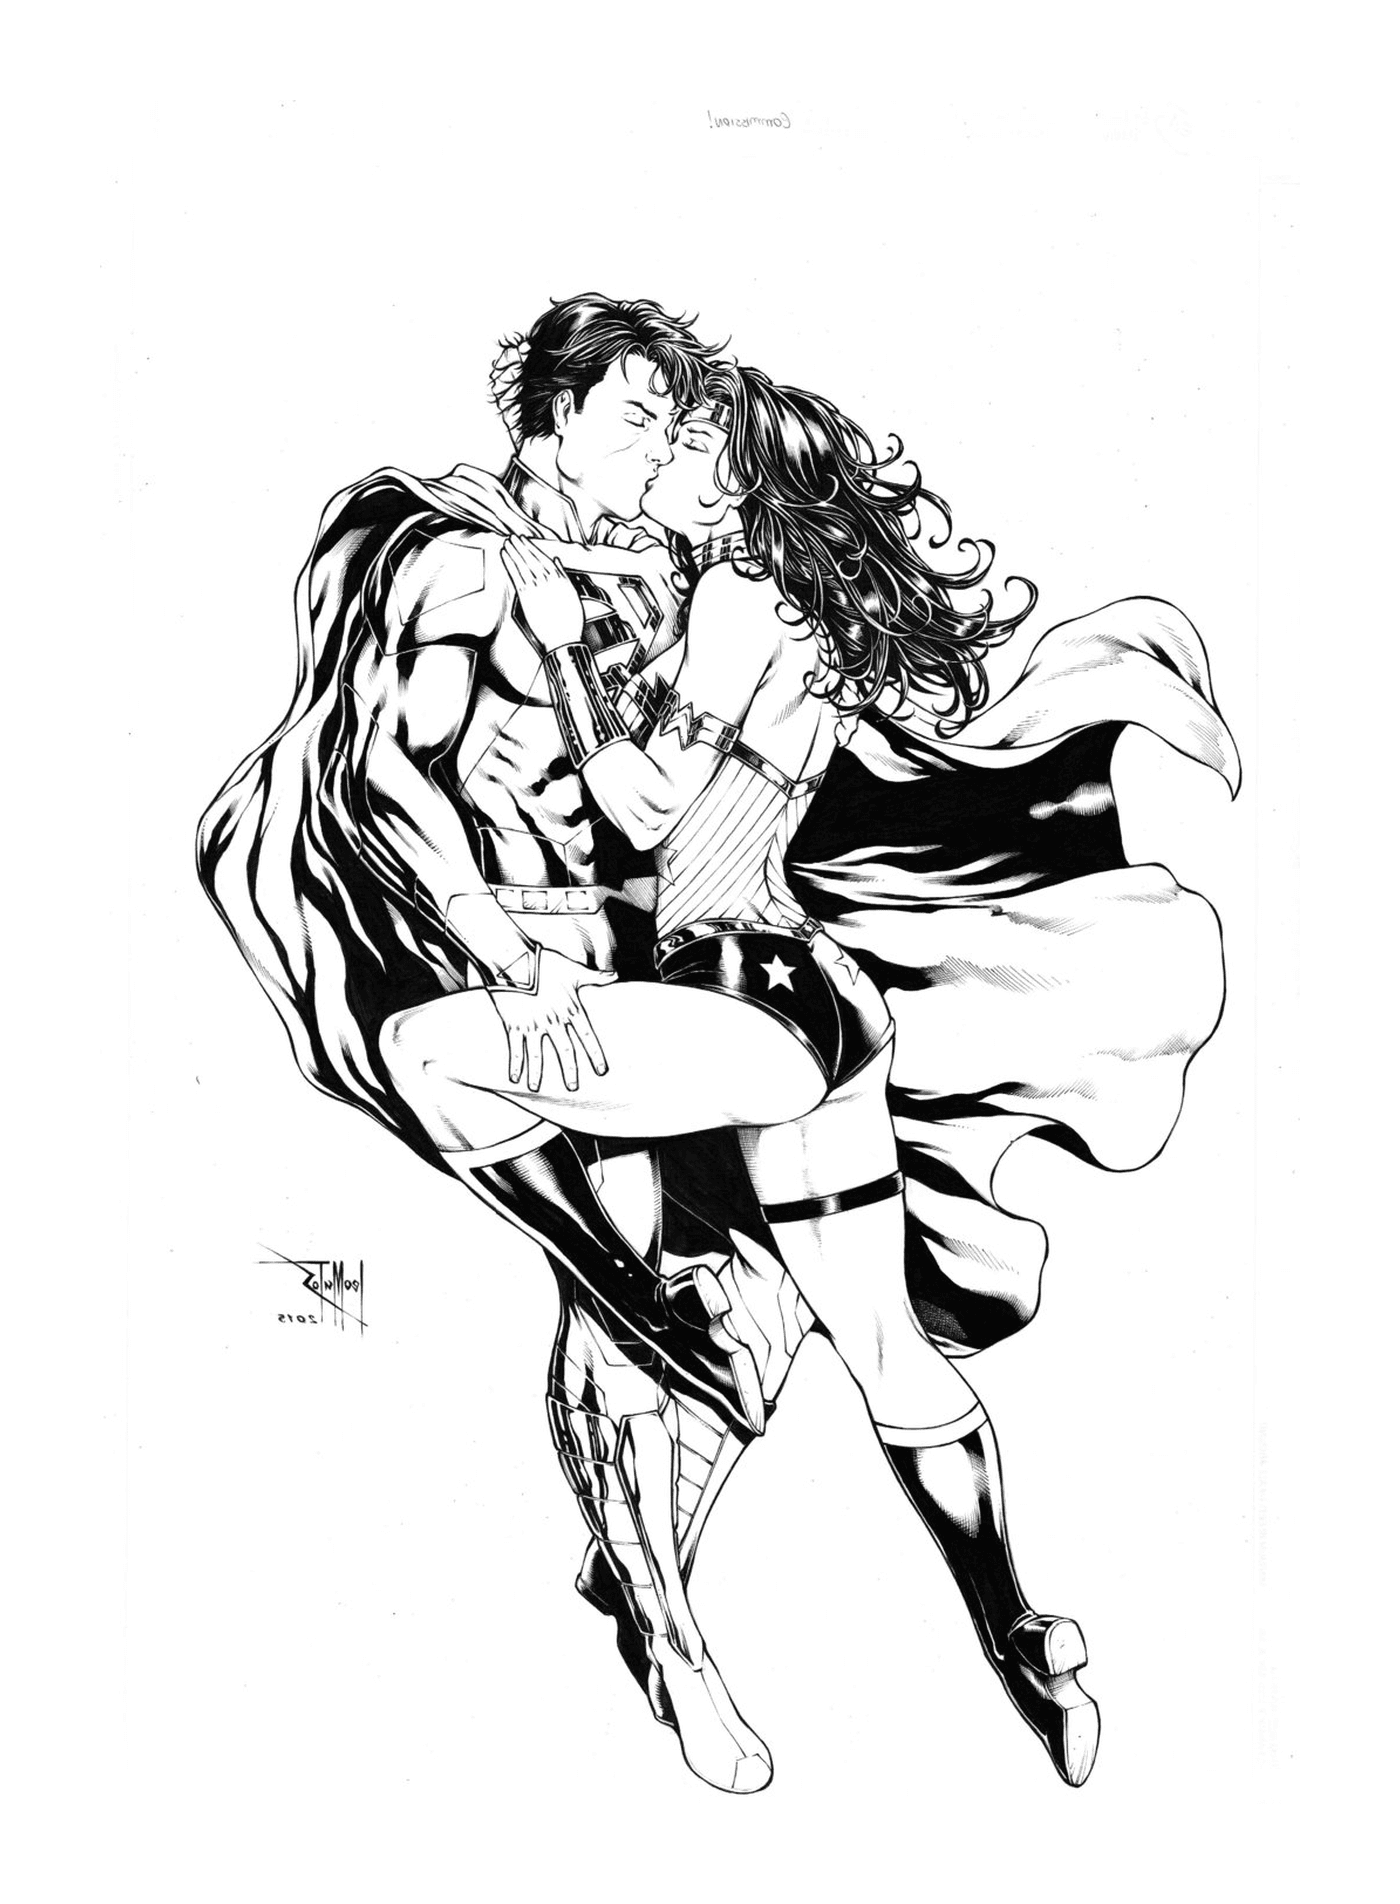   Superman et Wonder Woman s'embrassent 